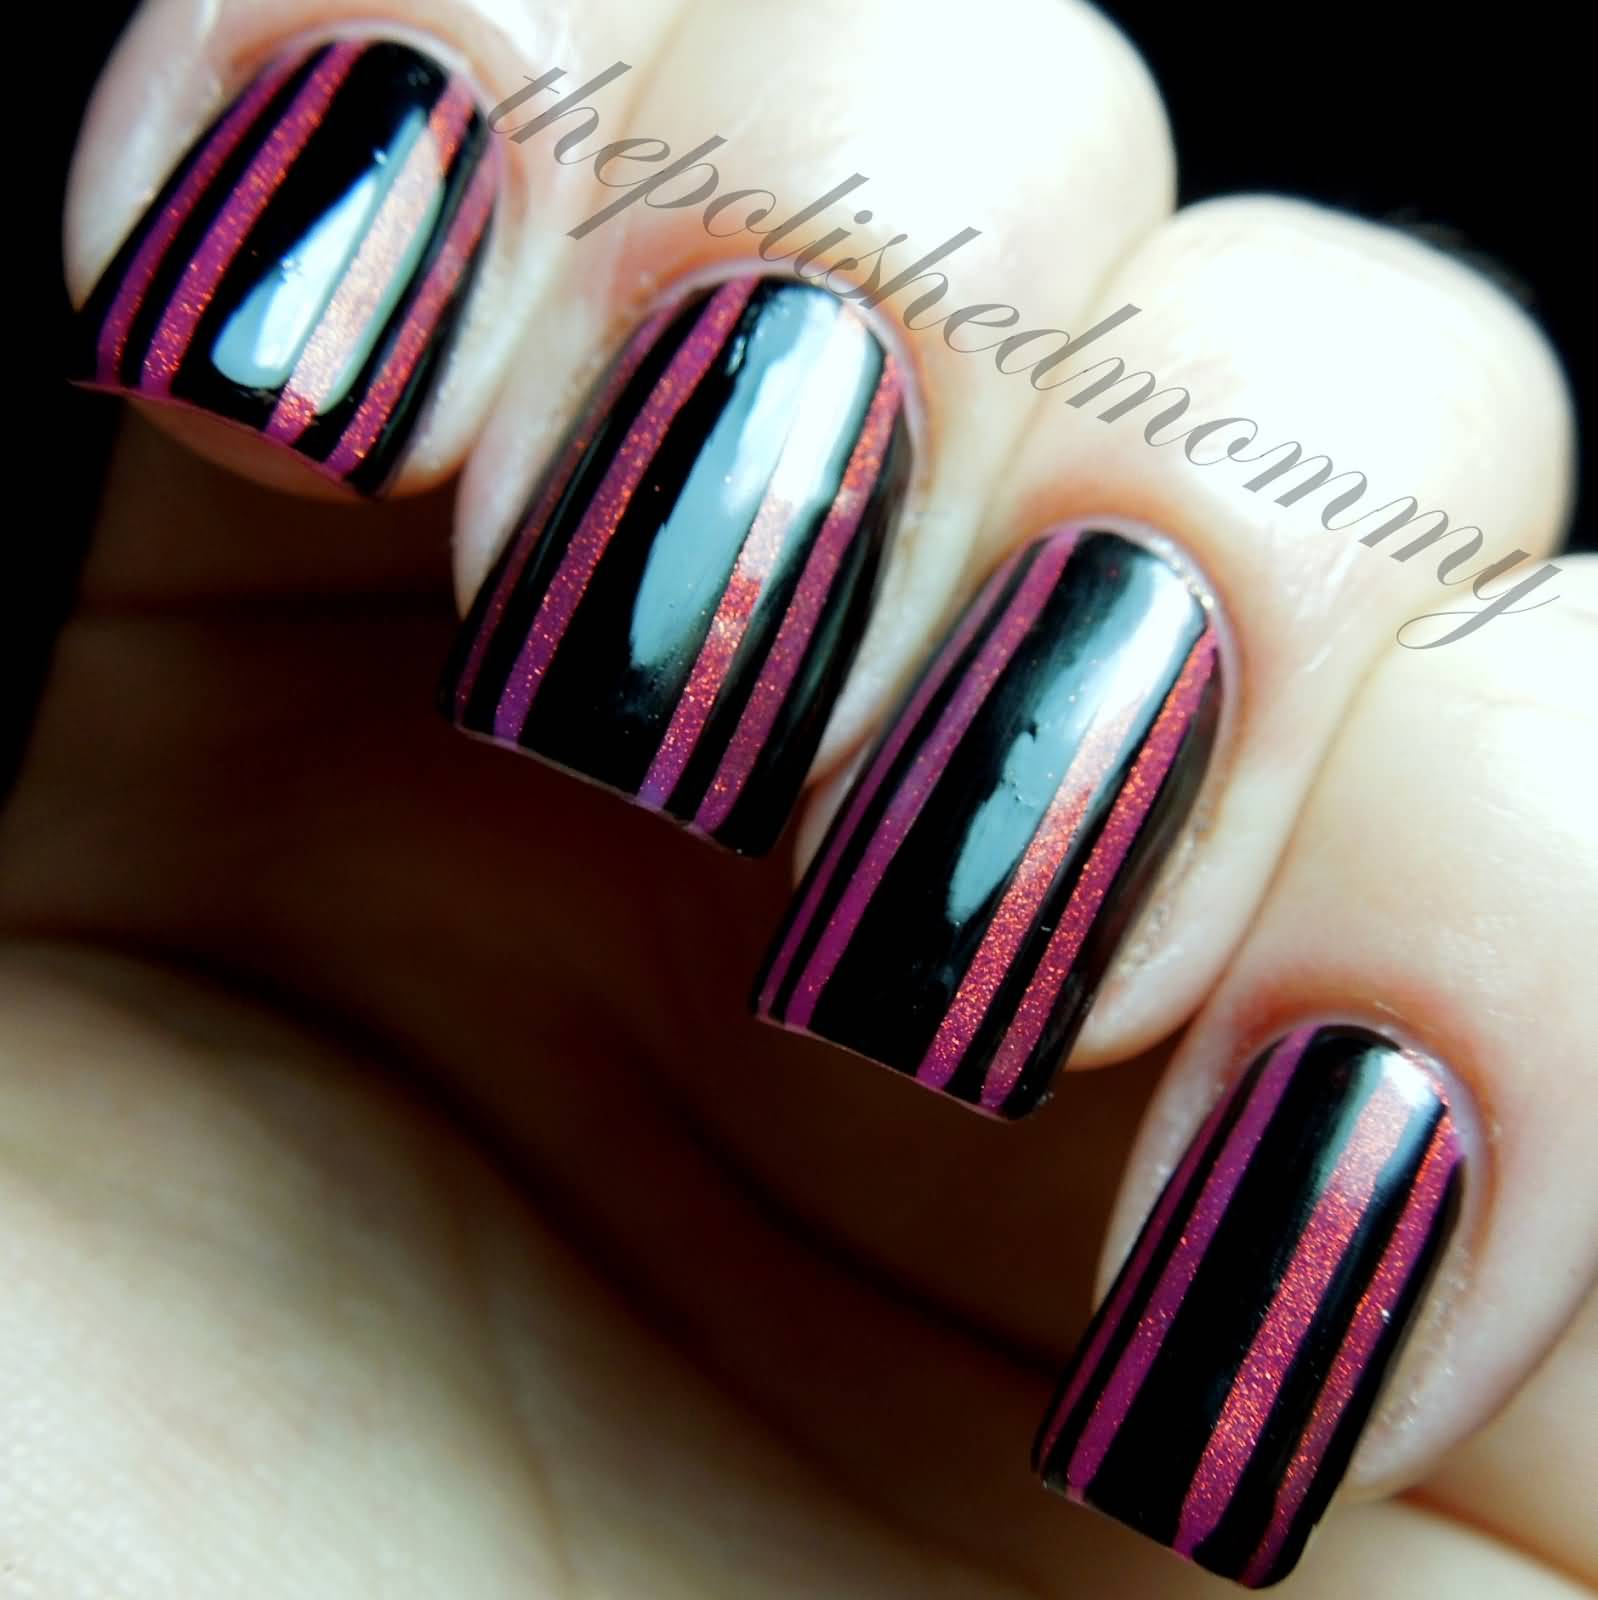 Black Glossy Nails With Purple Stripes Nail Art